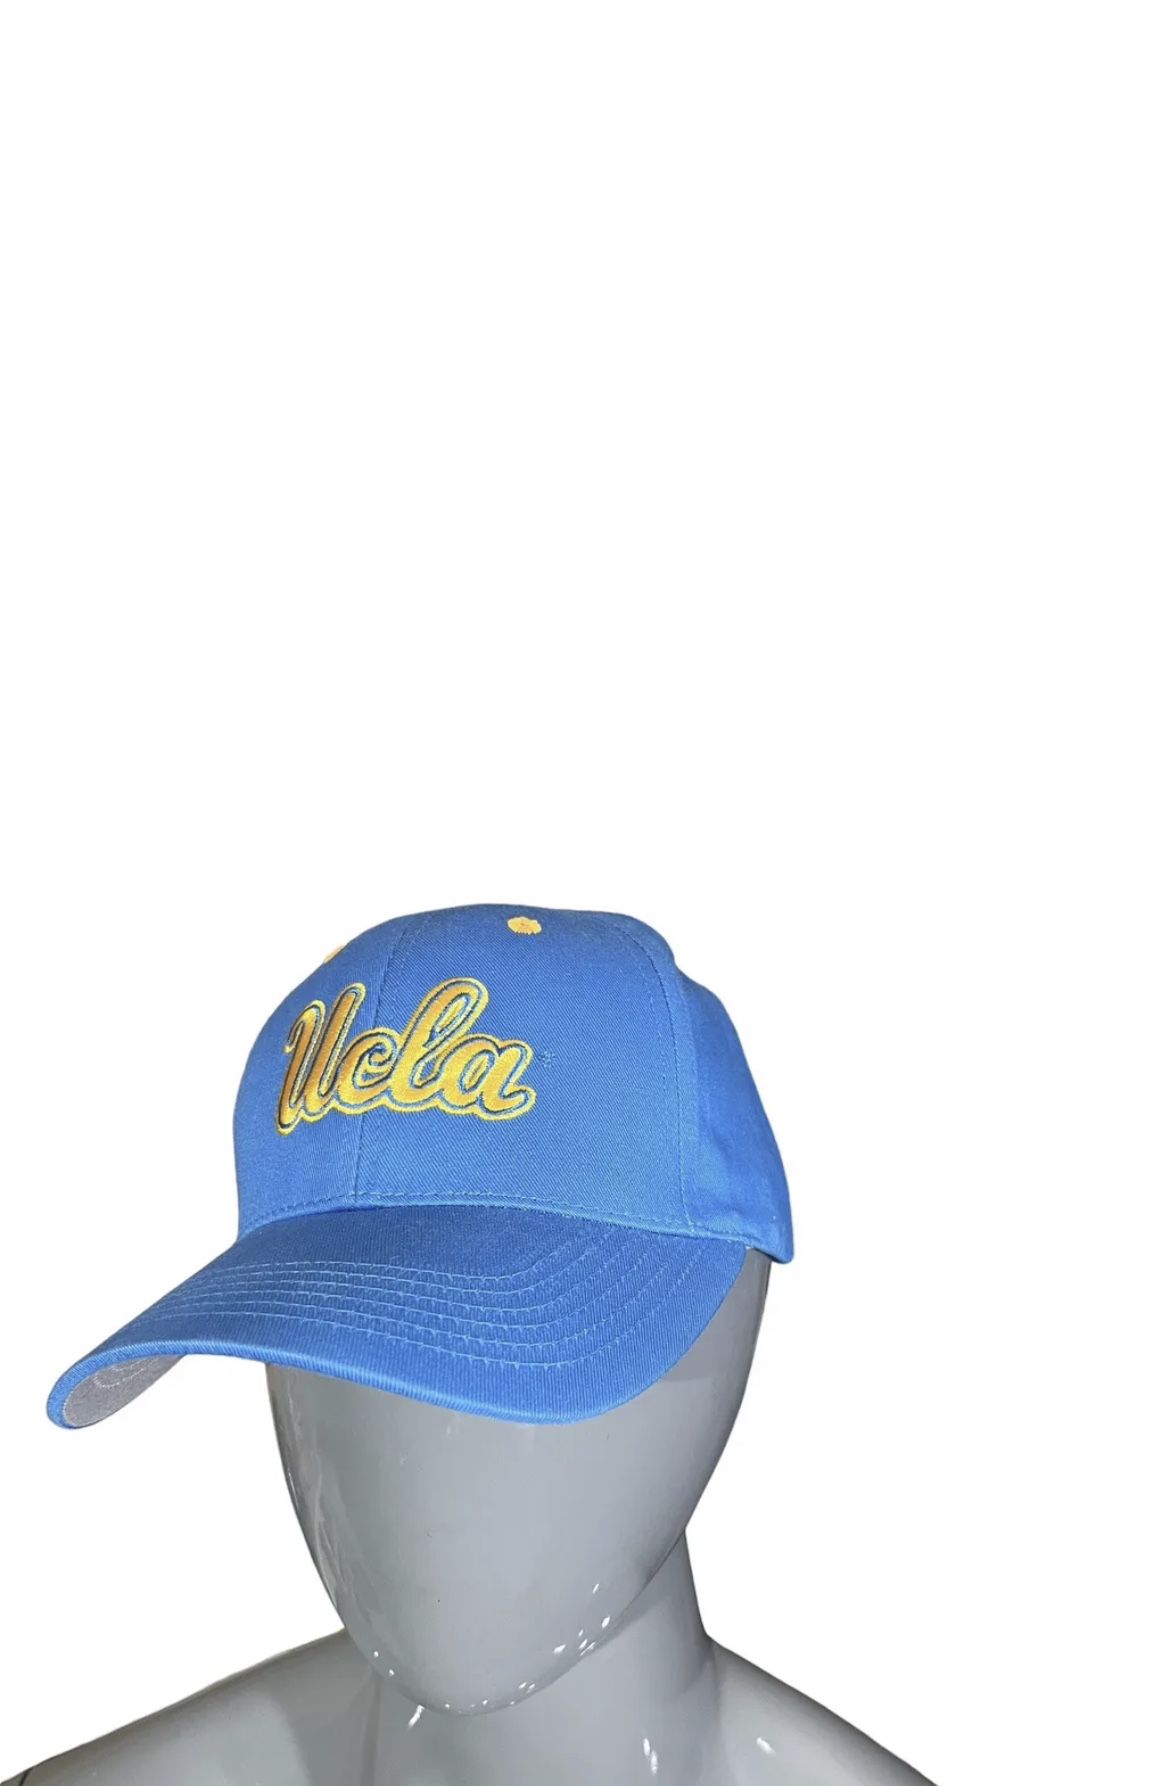 UCLA Cap one size adult baseball hat 